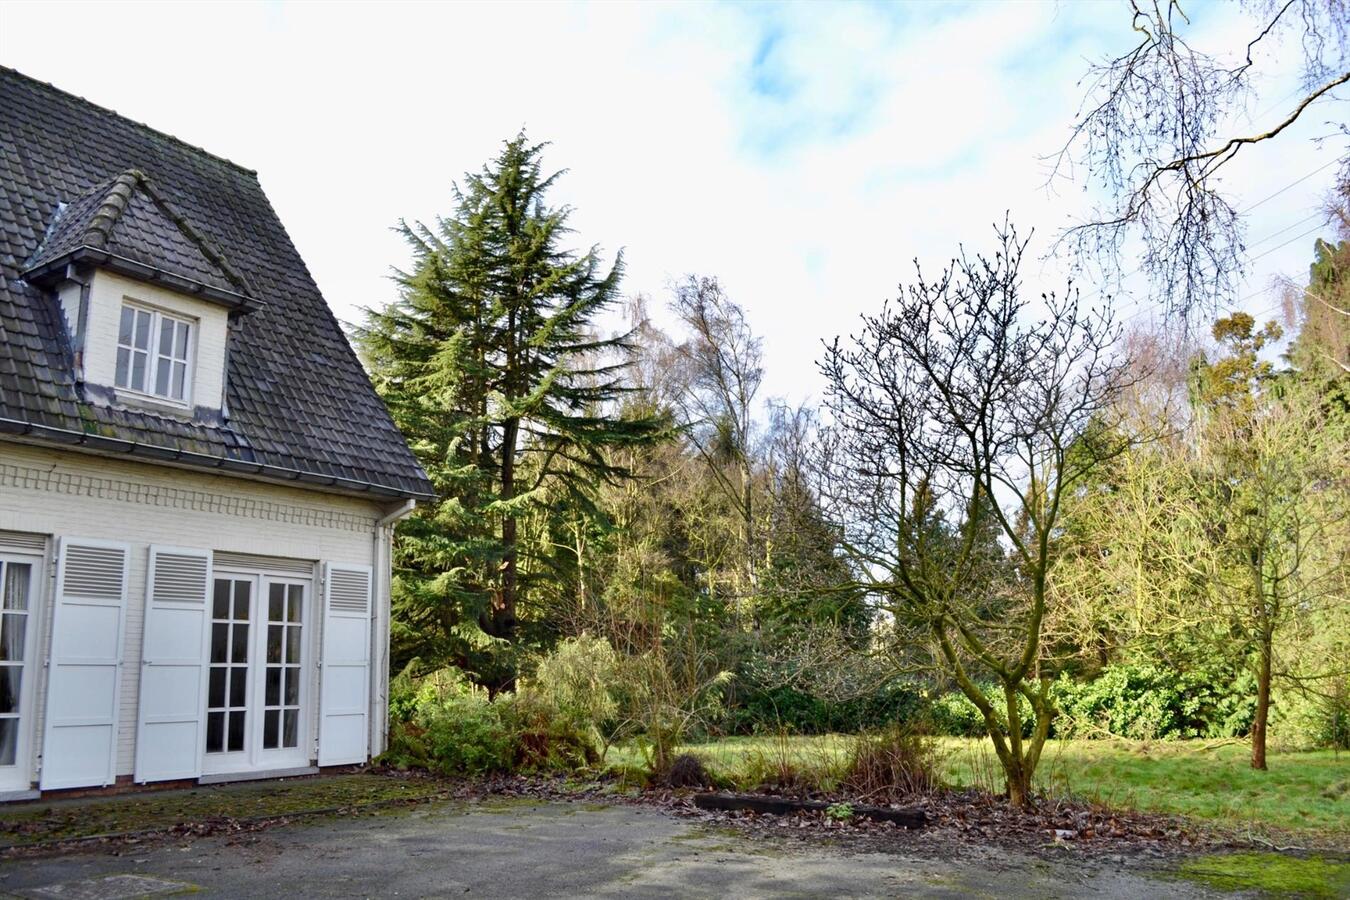 Property sold in Sint-Niklaas